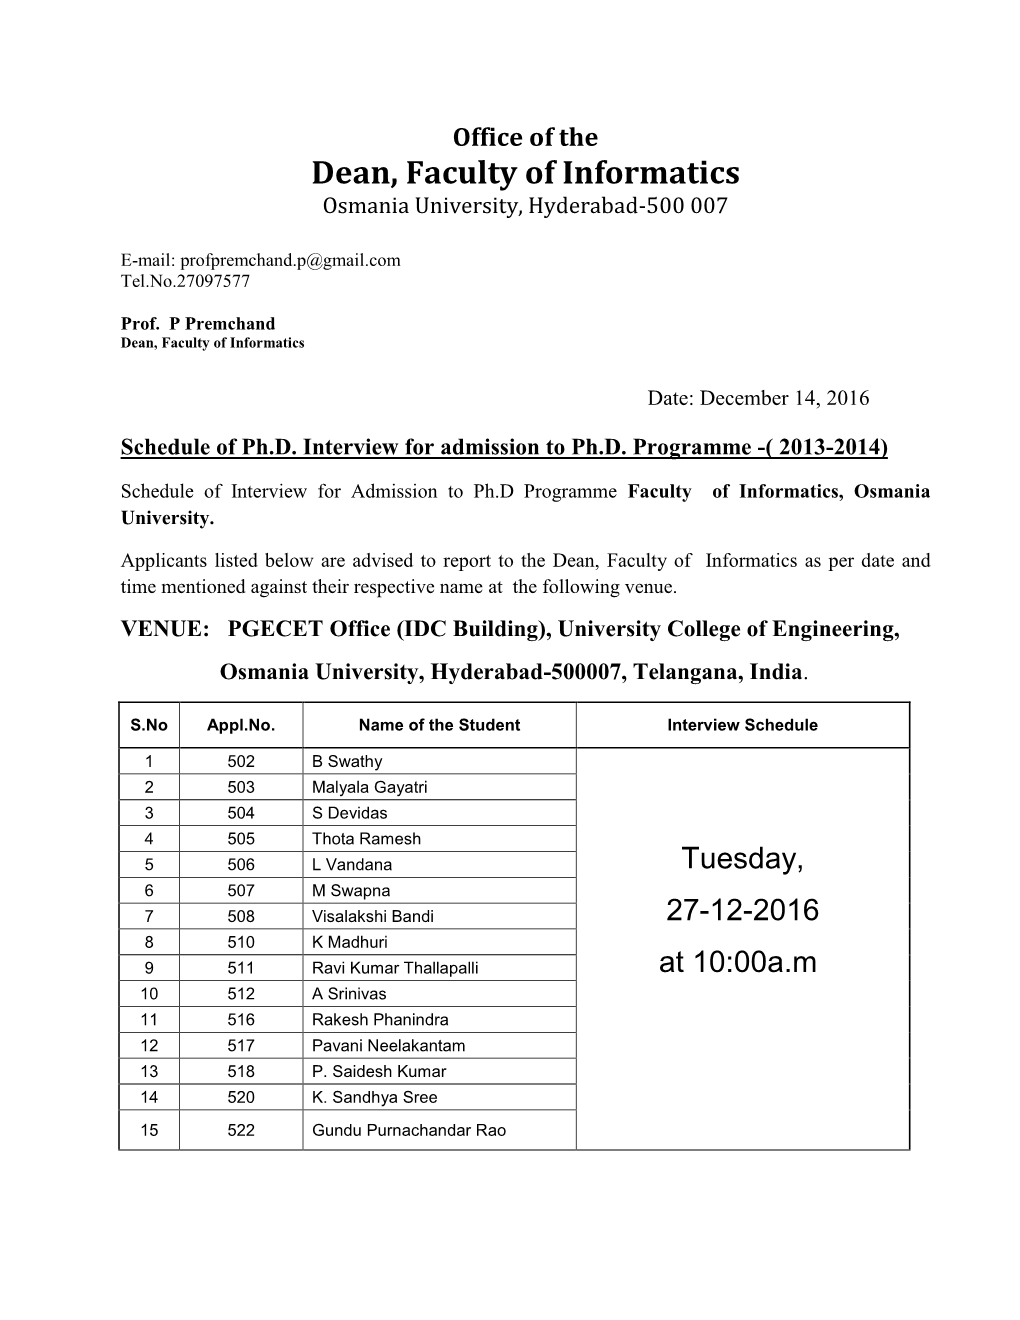 Dean, Faculty of Informatics Osmania University, Hyderabad-500 007